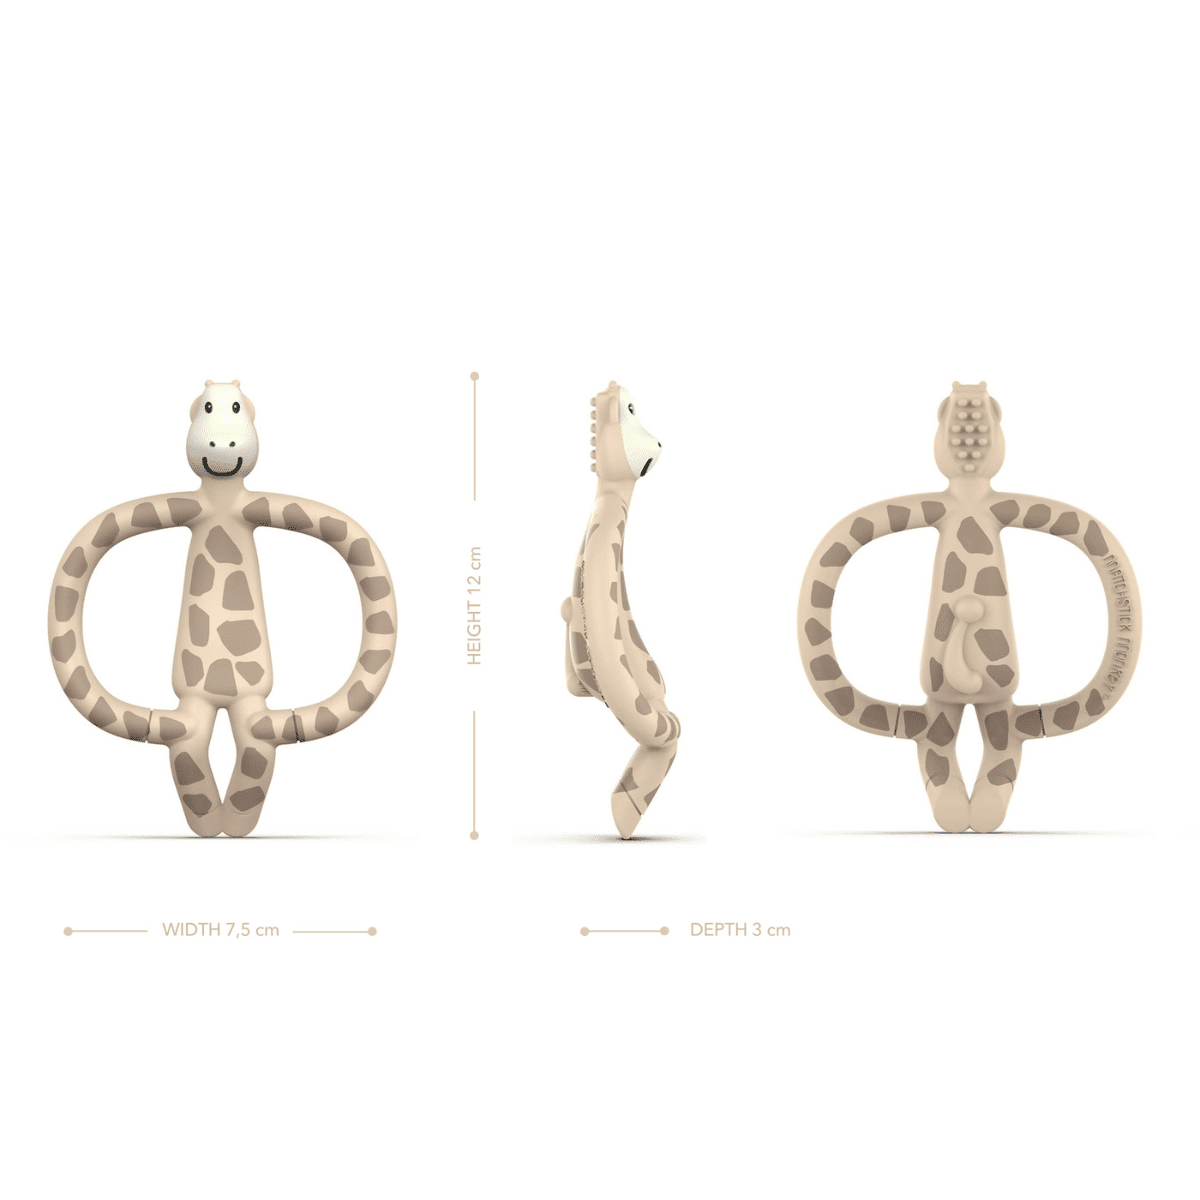 Matchstick monkey baby teething muslin giraffe toy measurements